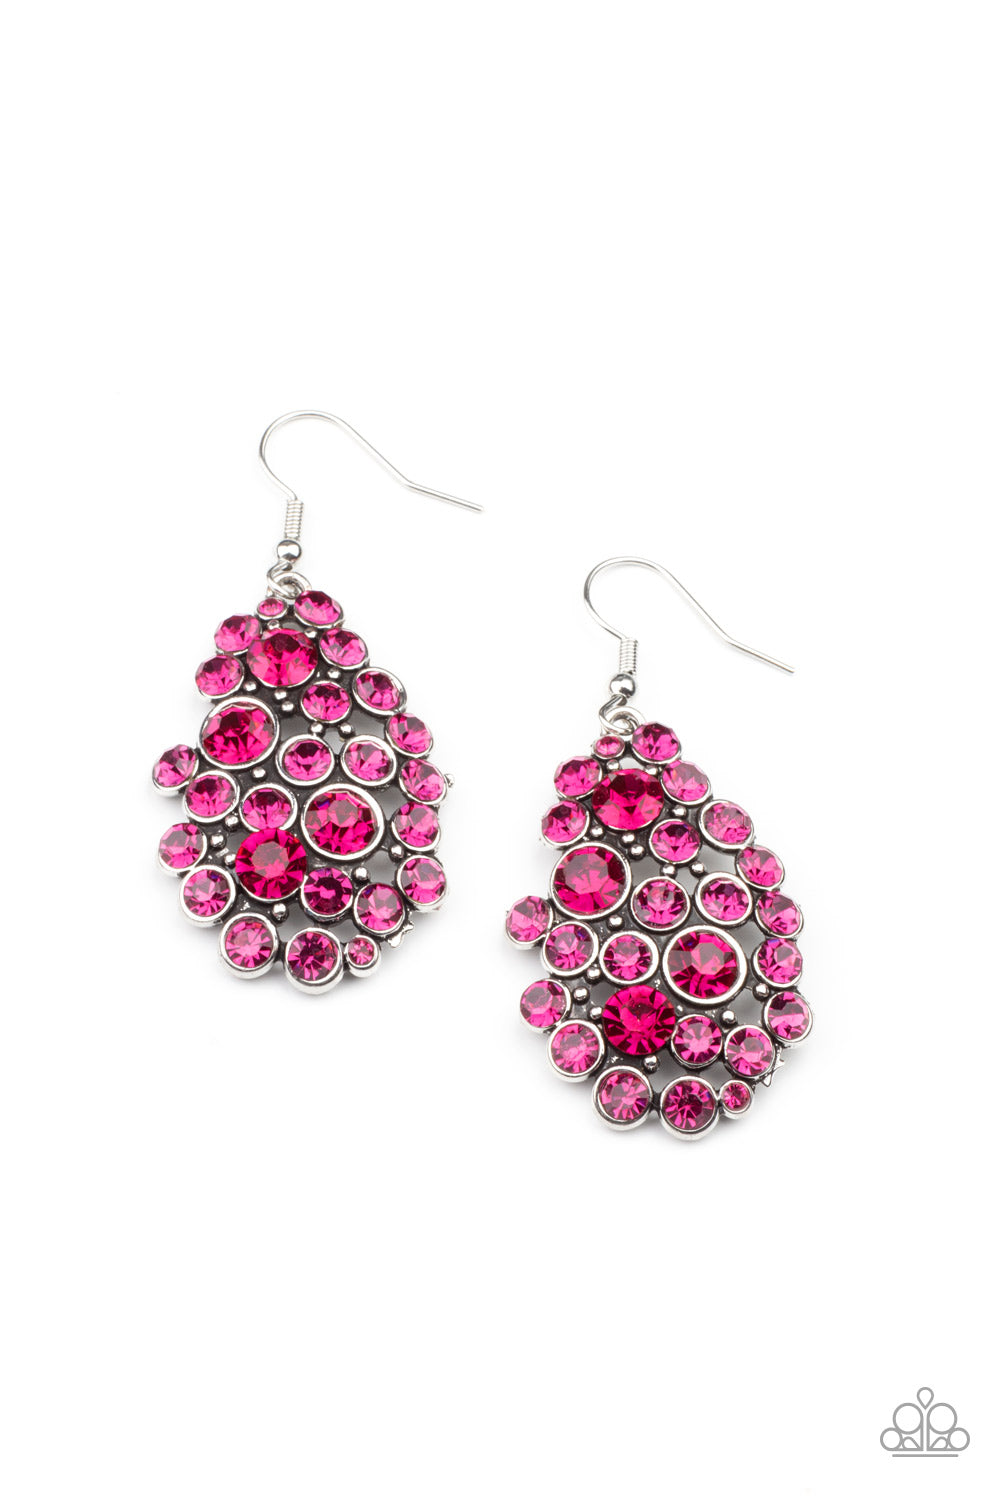 Smolder Effect - Pink Earring - Princess Glam Shop